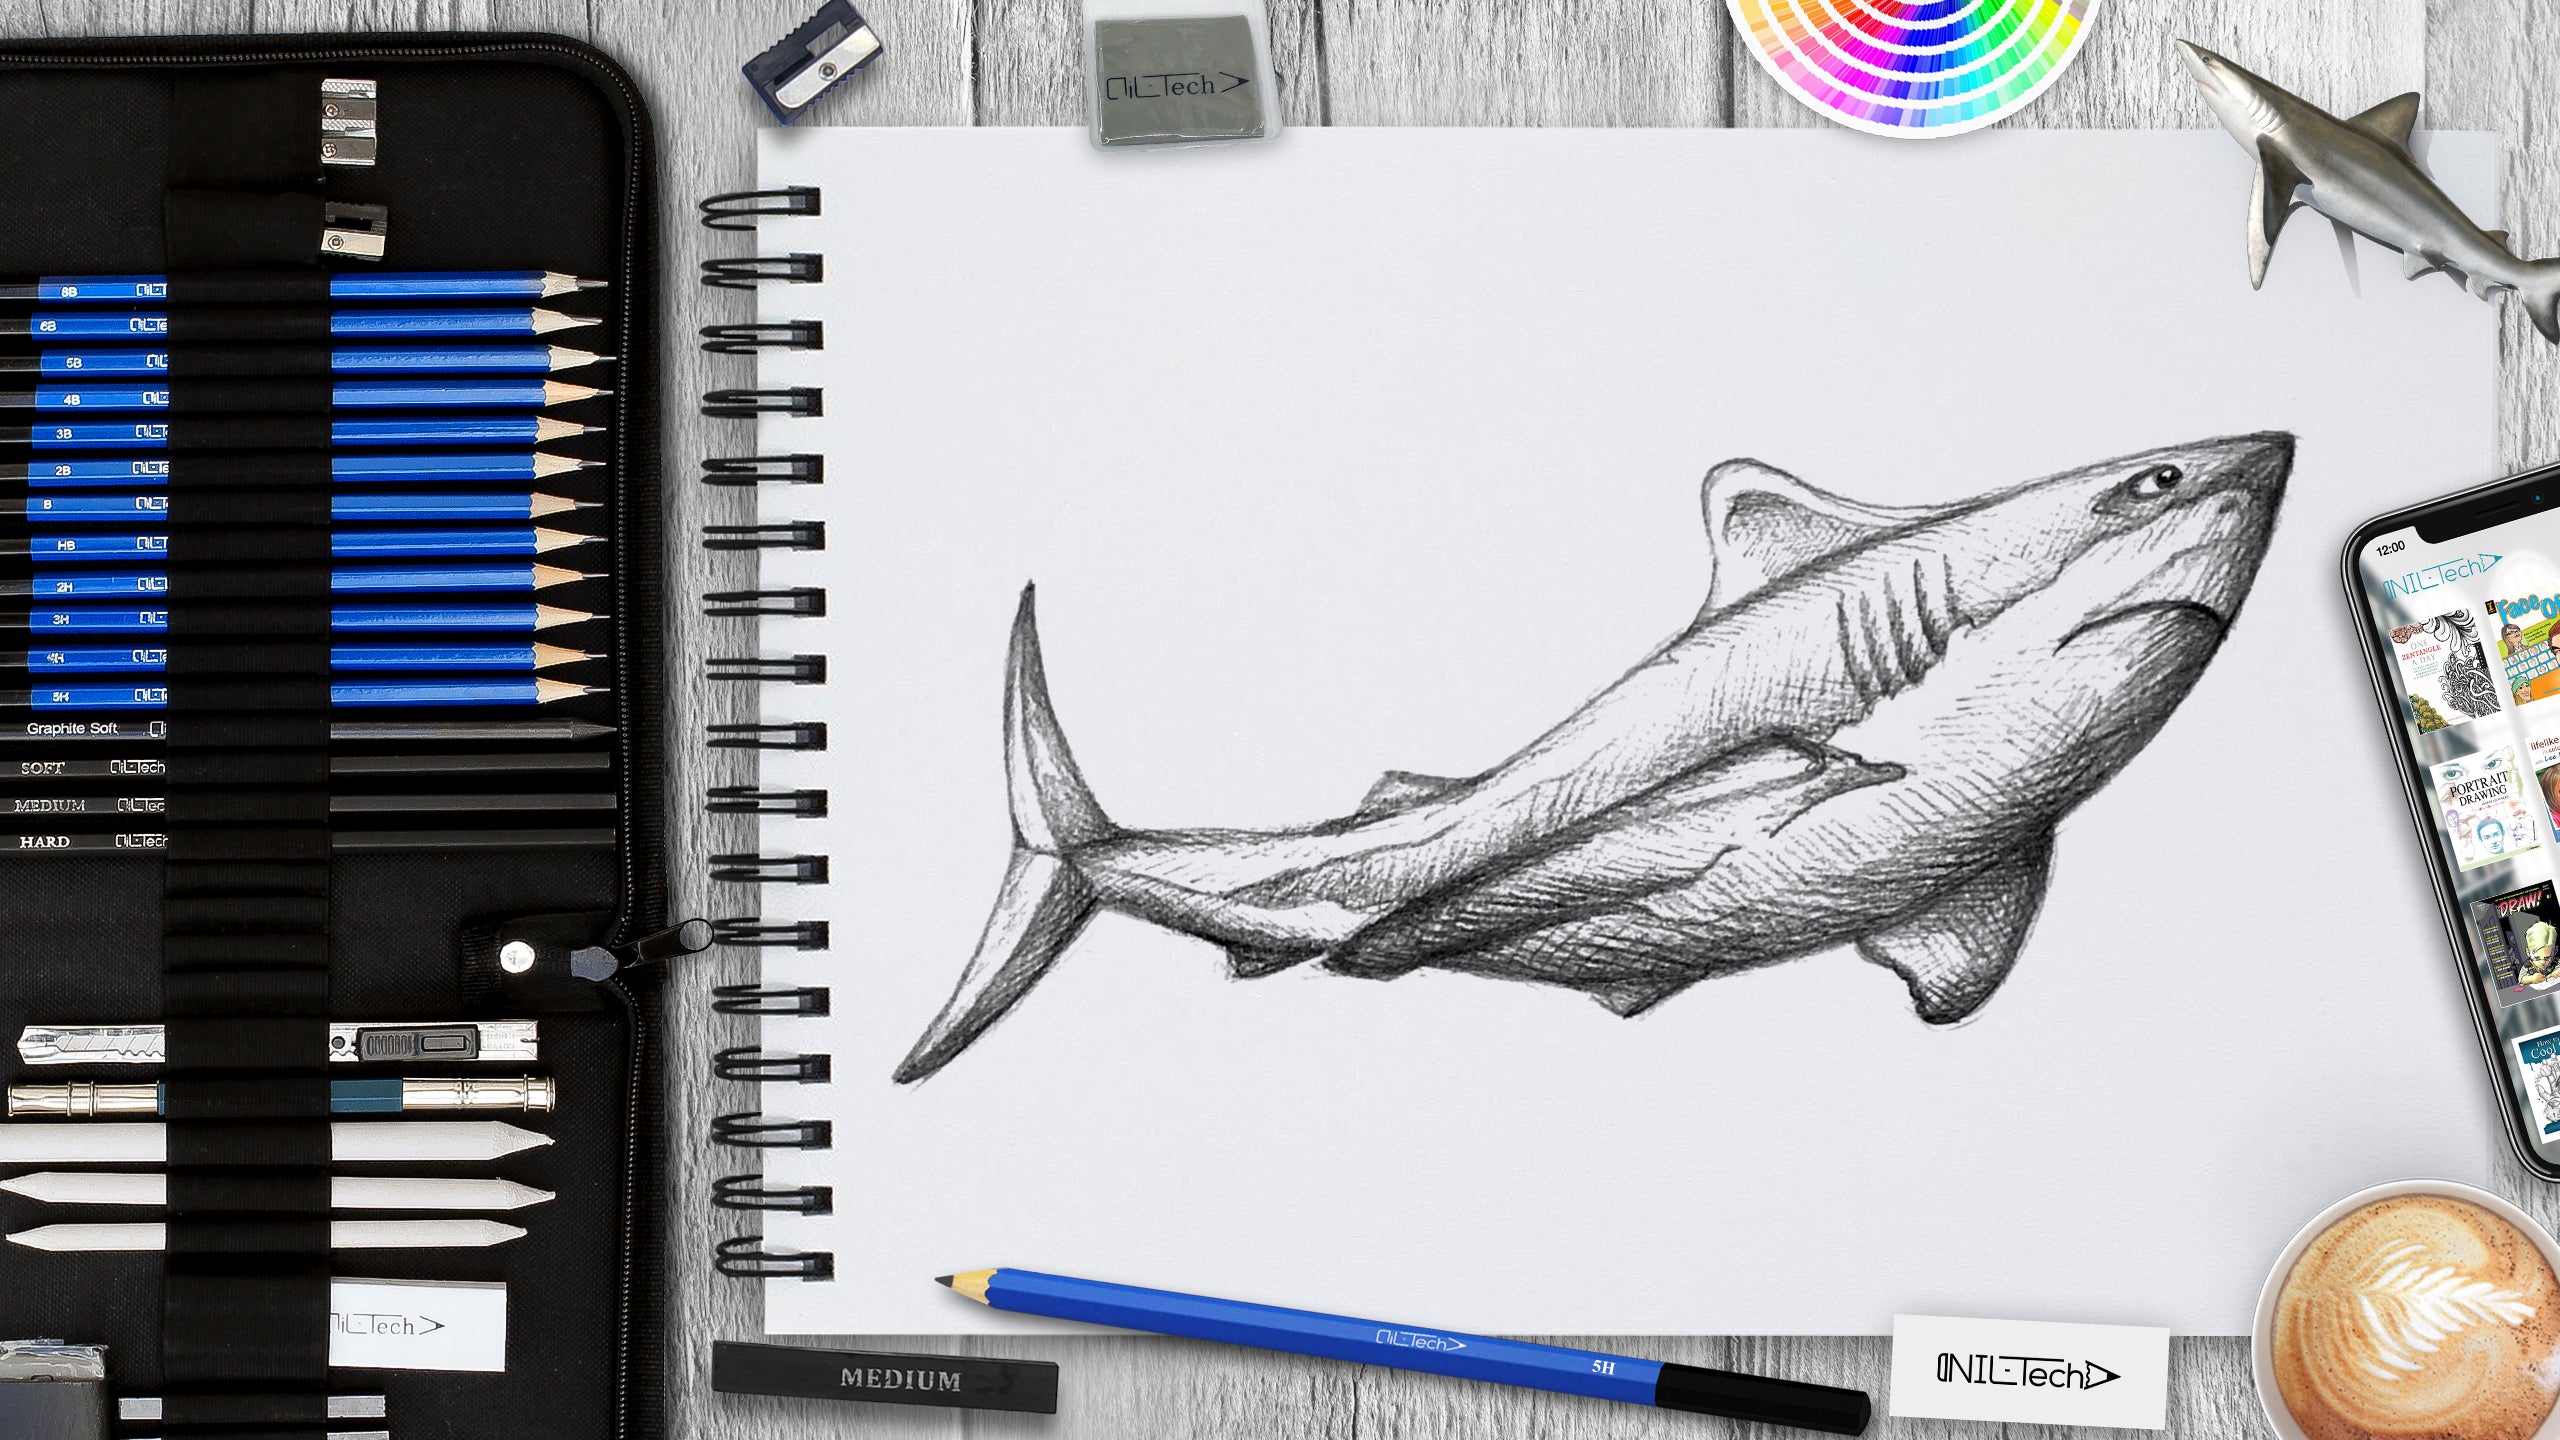 simple shark sketch